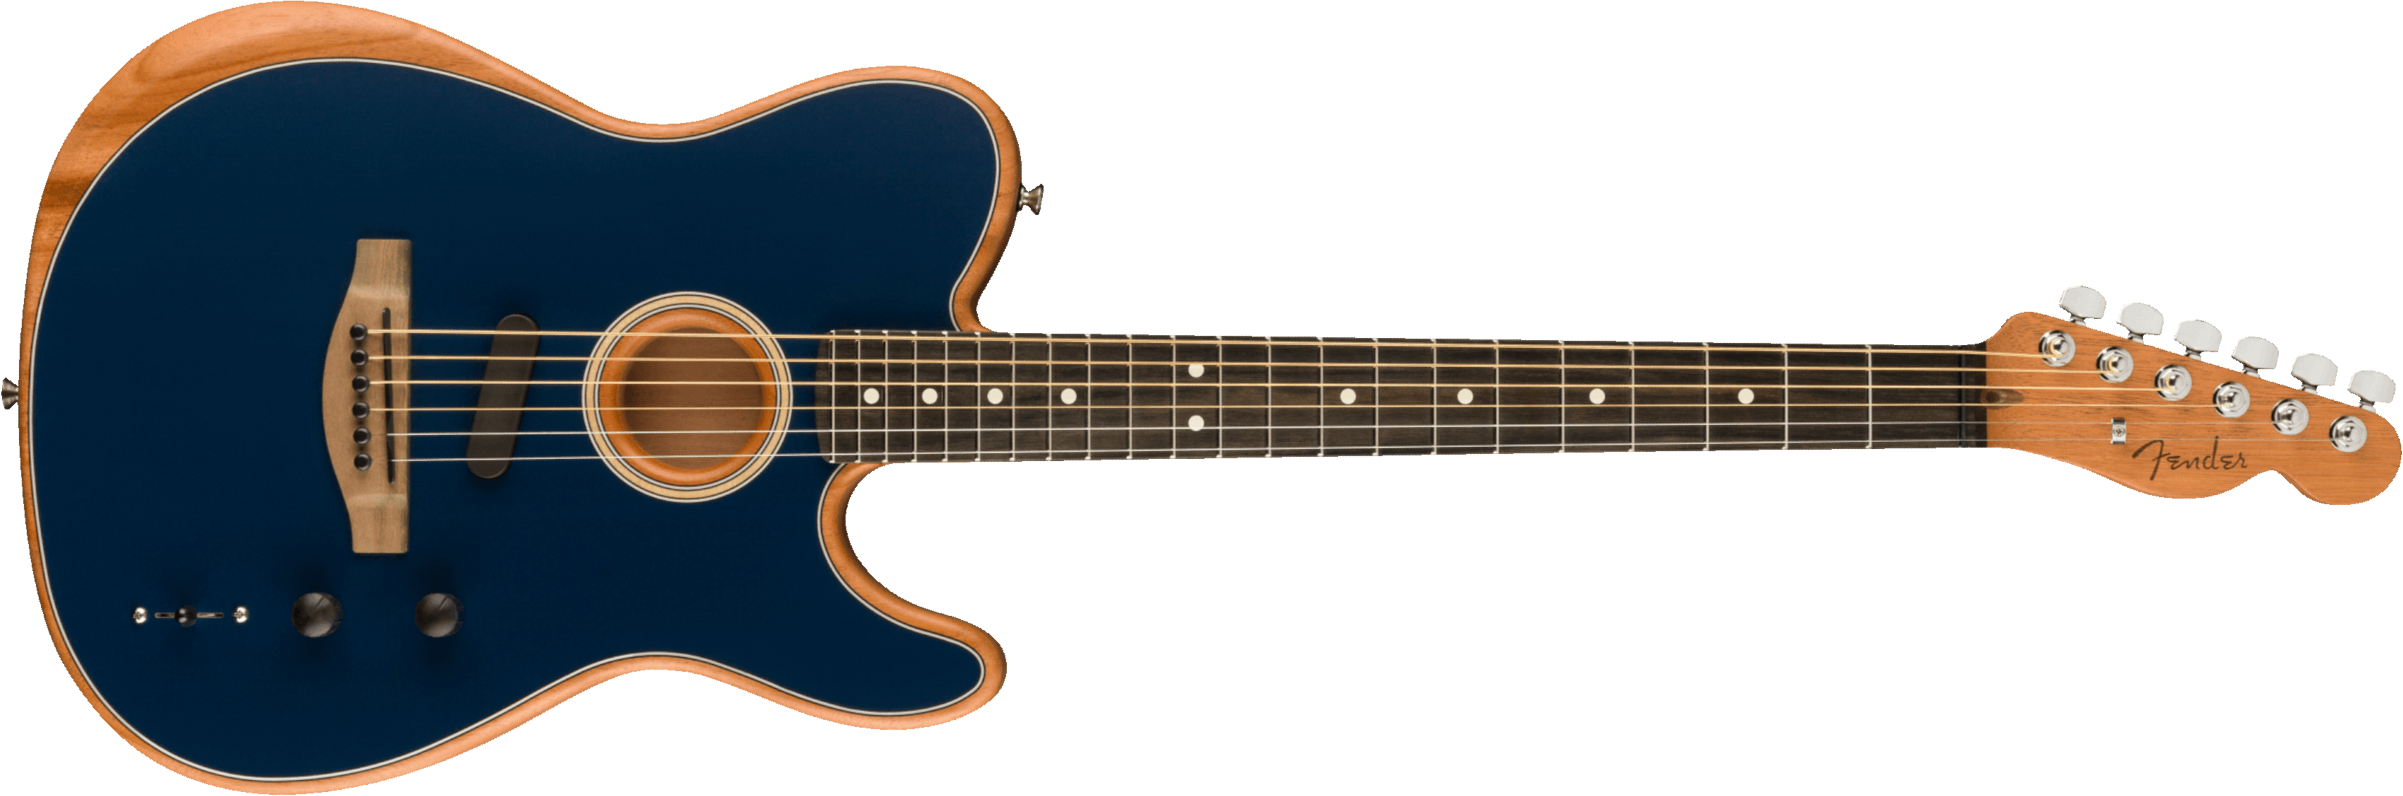 Fender American Acoustasonic Tele Usa Eb - Steel Blue - Electro acoustic guitar - Main picture